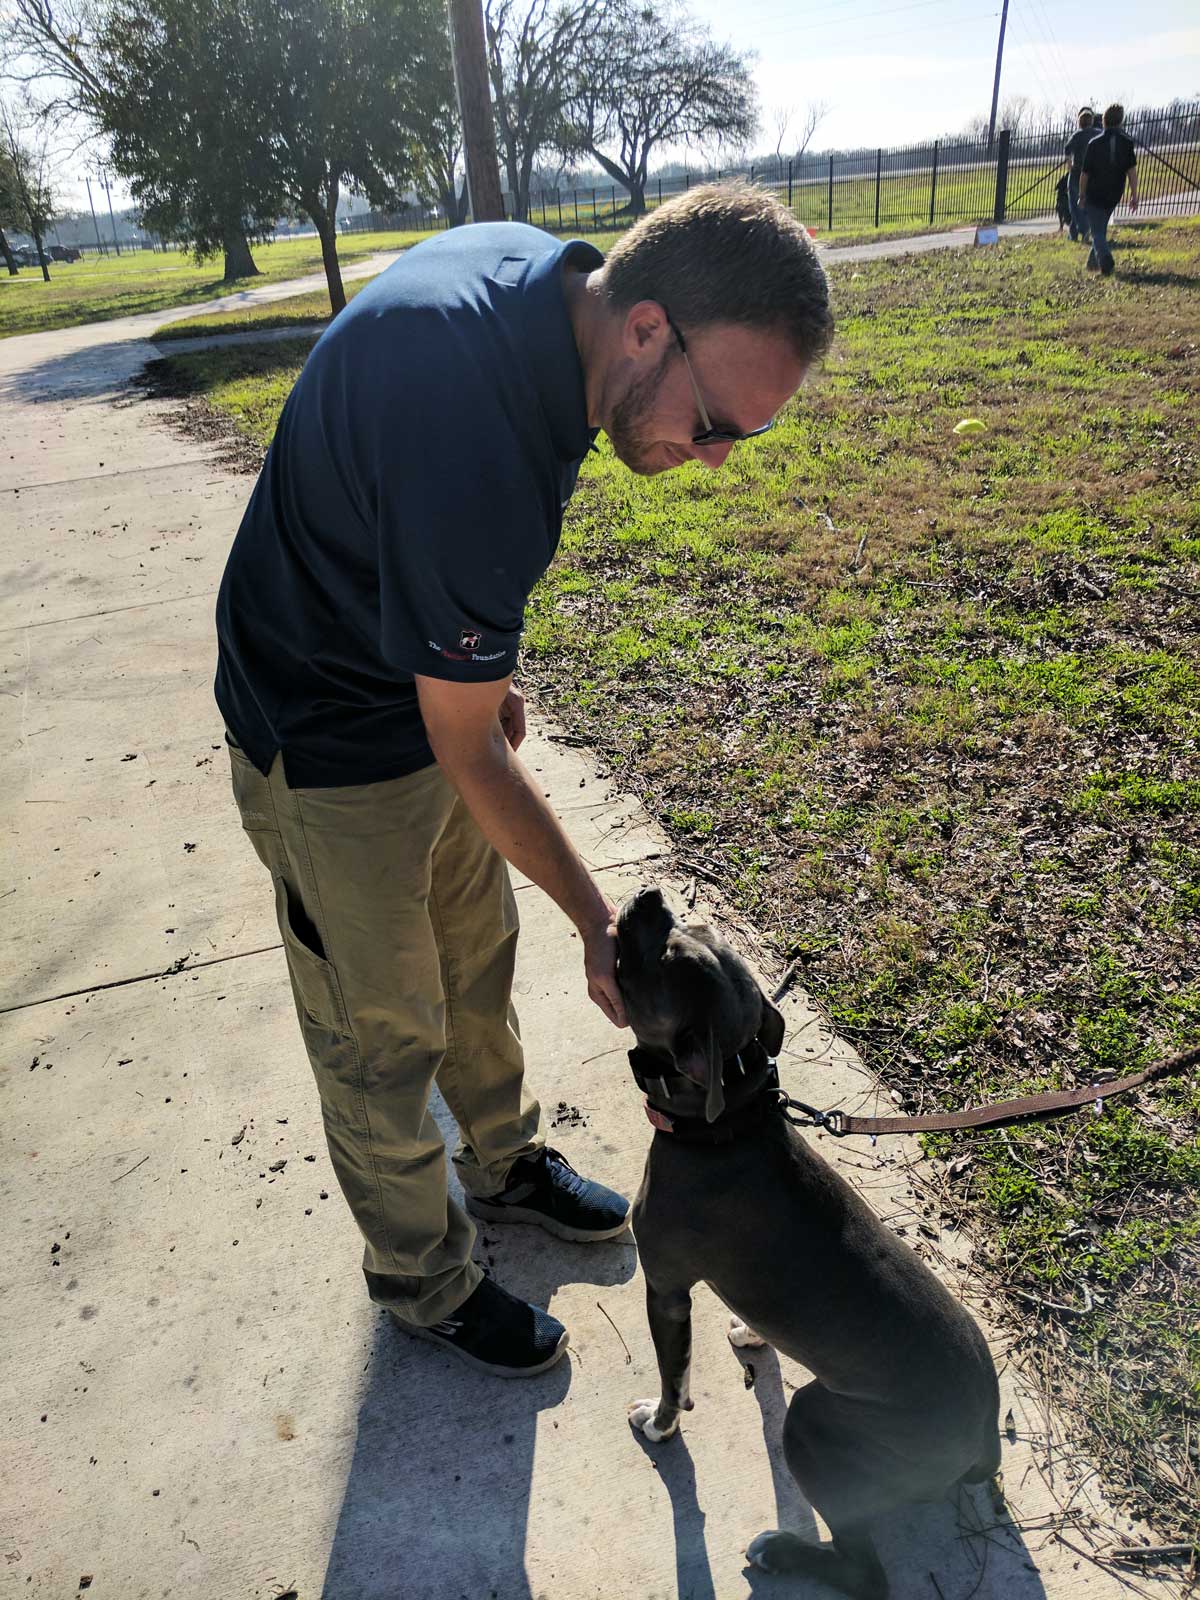 Dog Training Elite offers expert aggressive dog training programs near you in Baton Rouge.